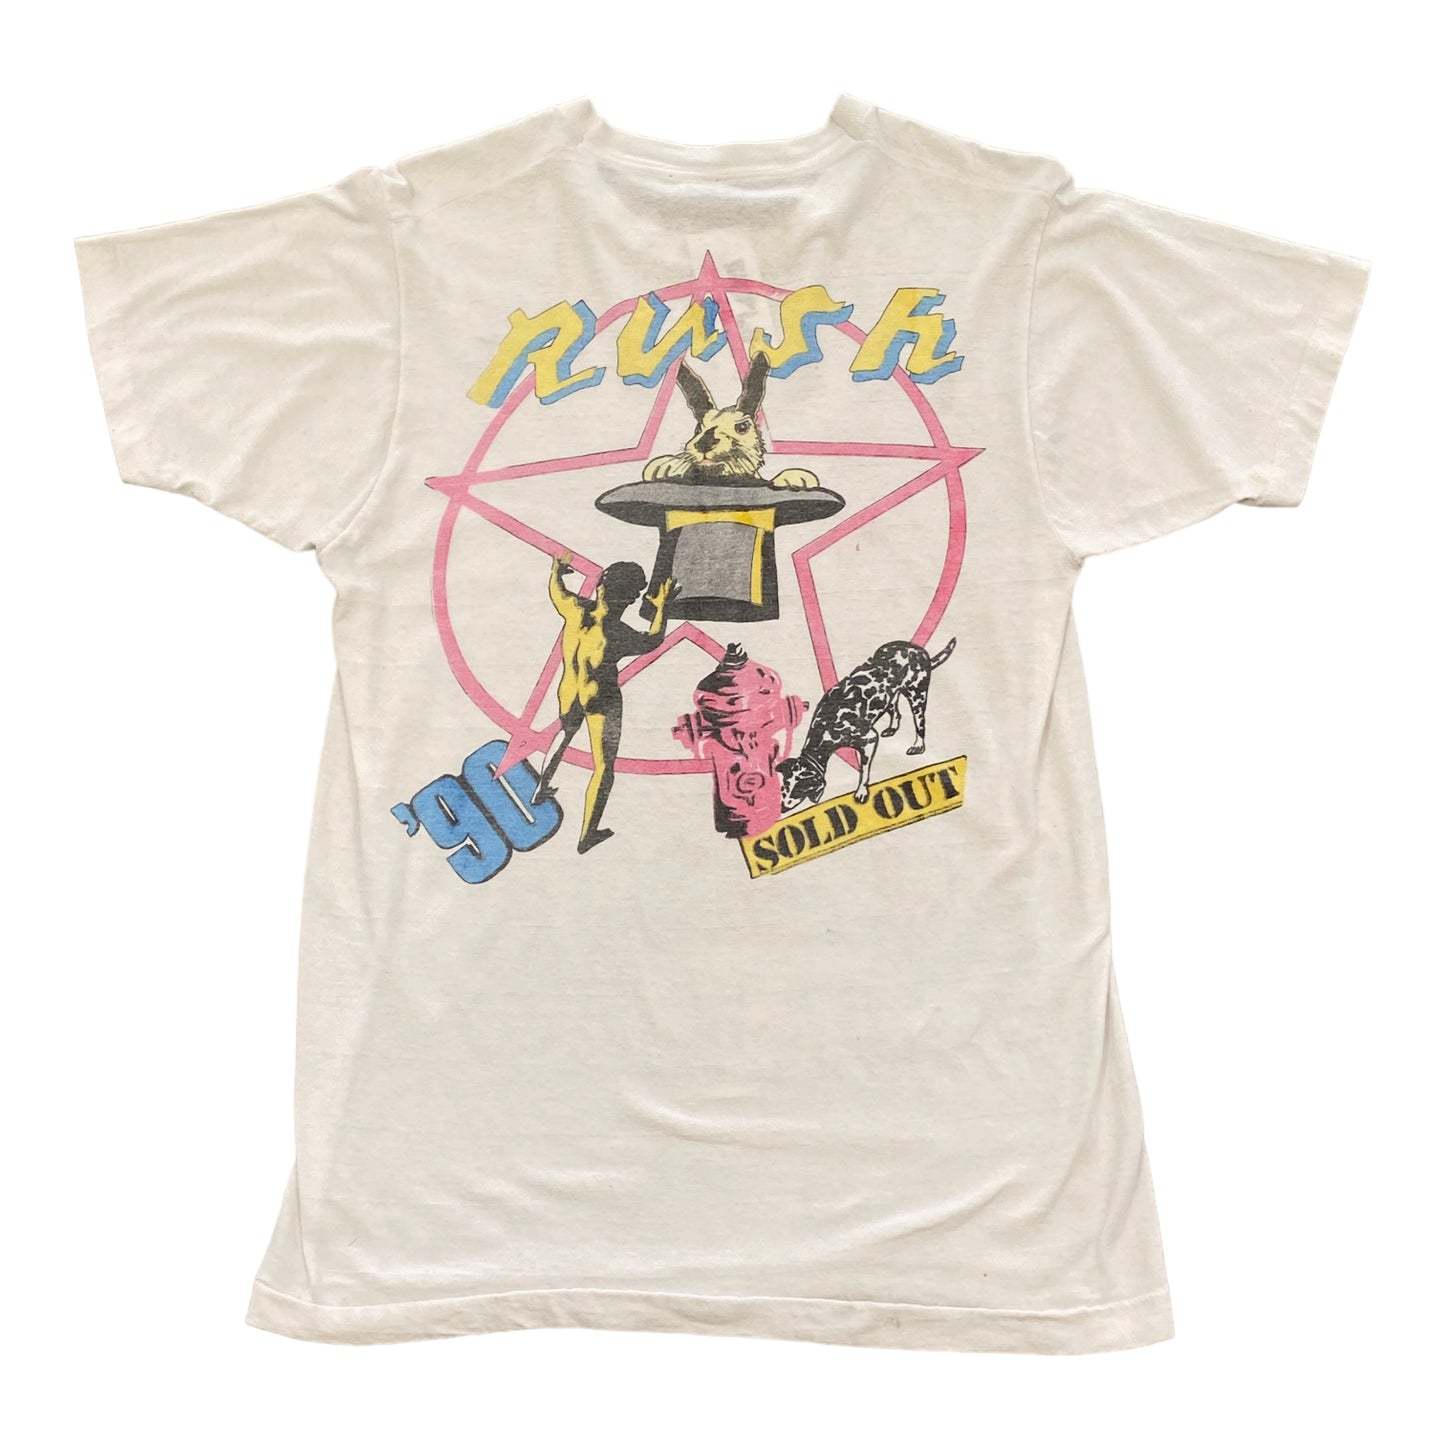 1990’s Rush Presto (North American Tour) Vintage Band T-shirt